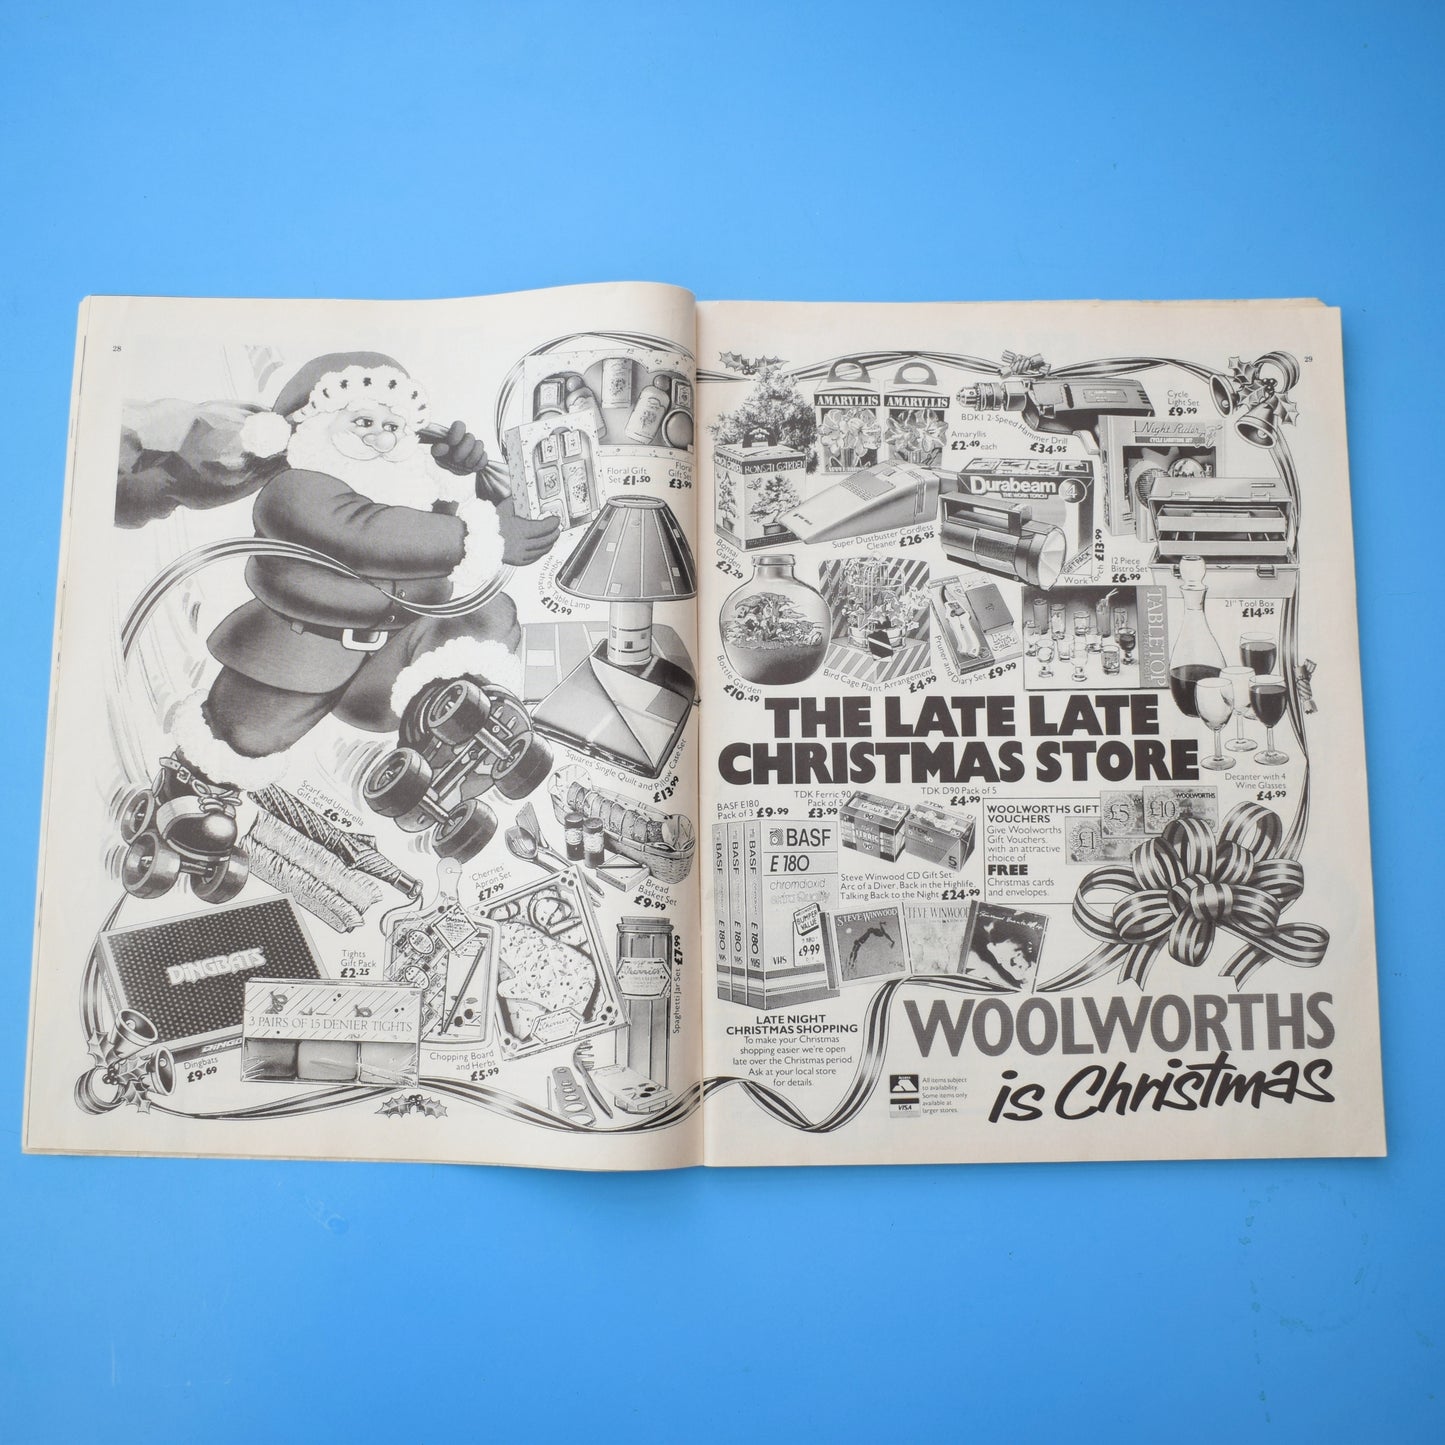 Vintage 1980s Radio / TV Times Magazines Christmas